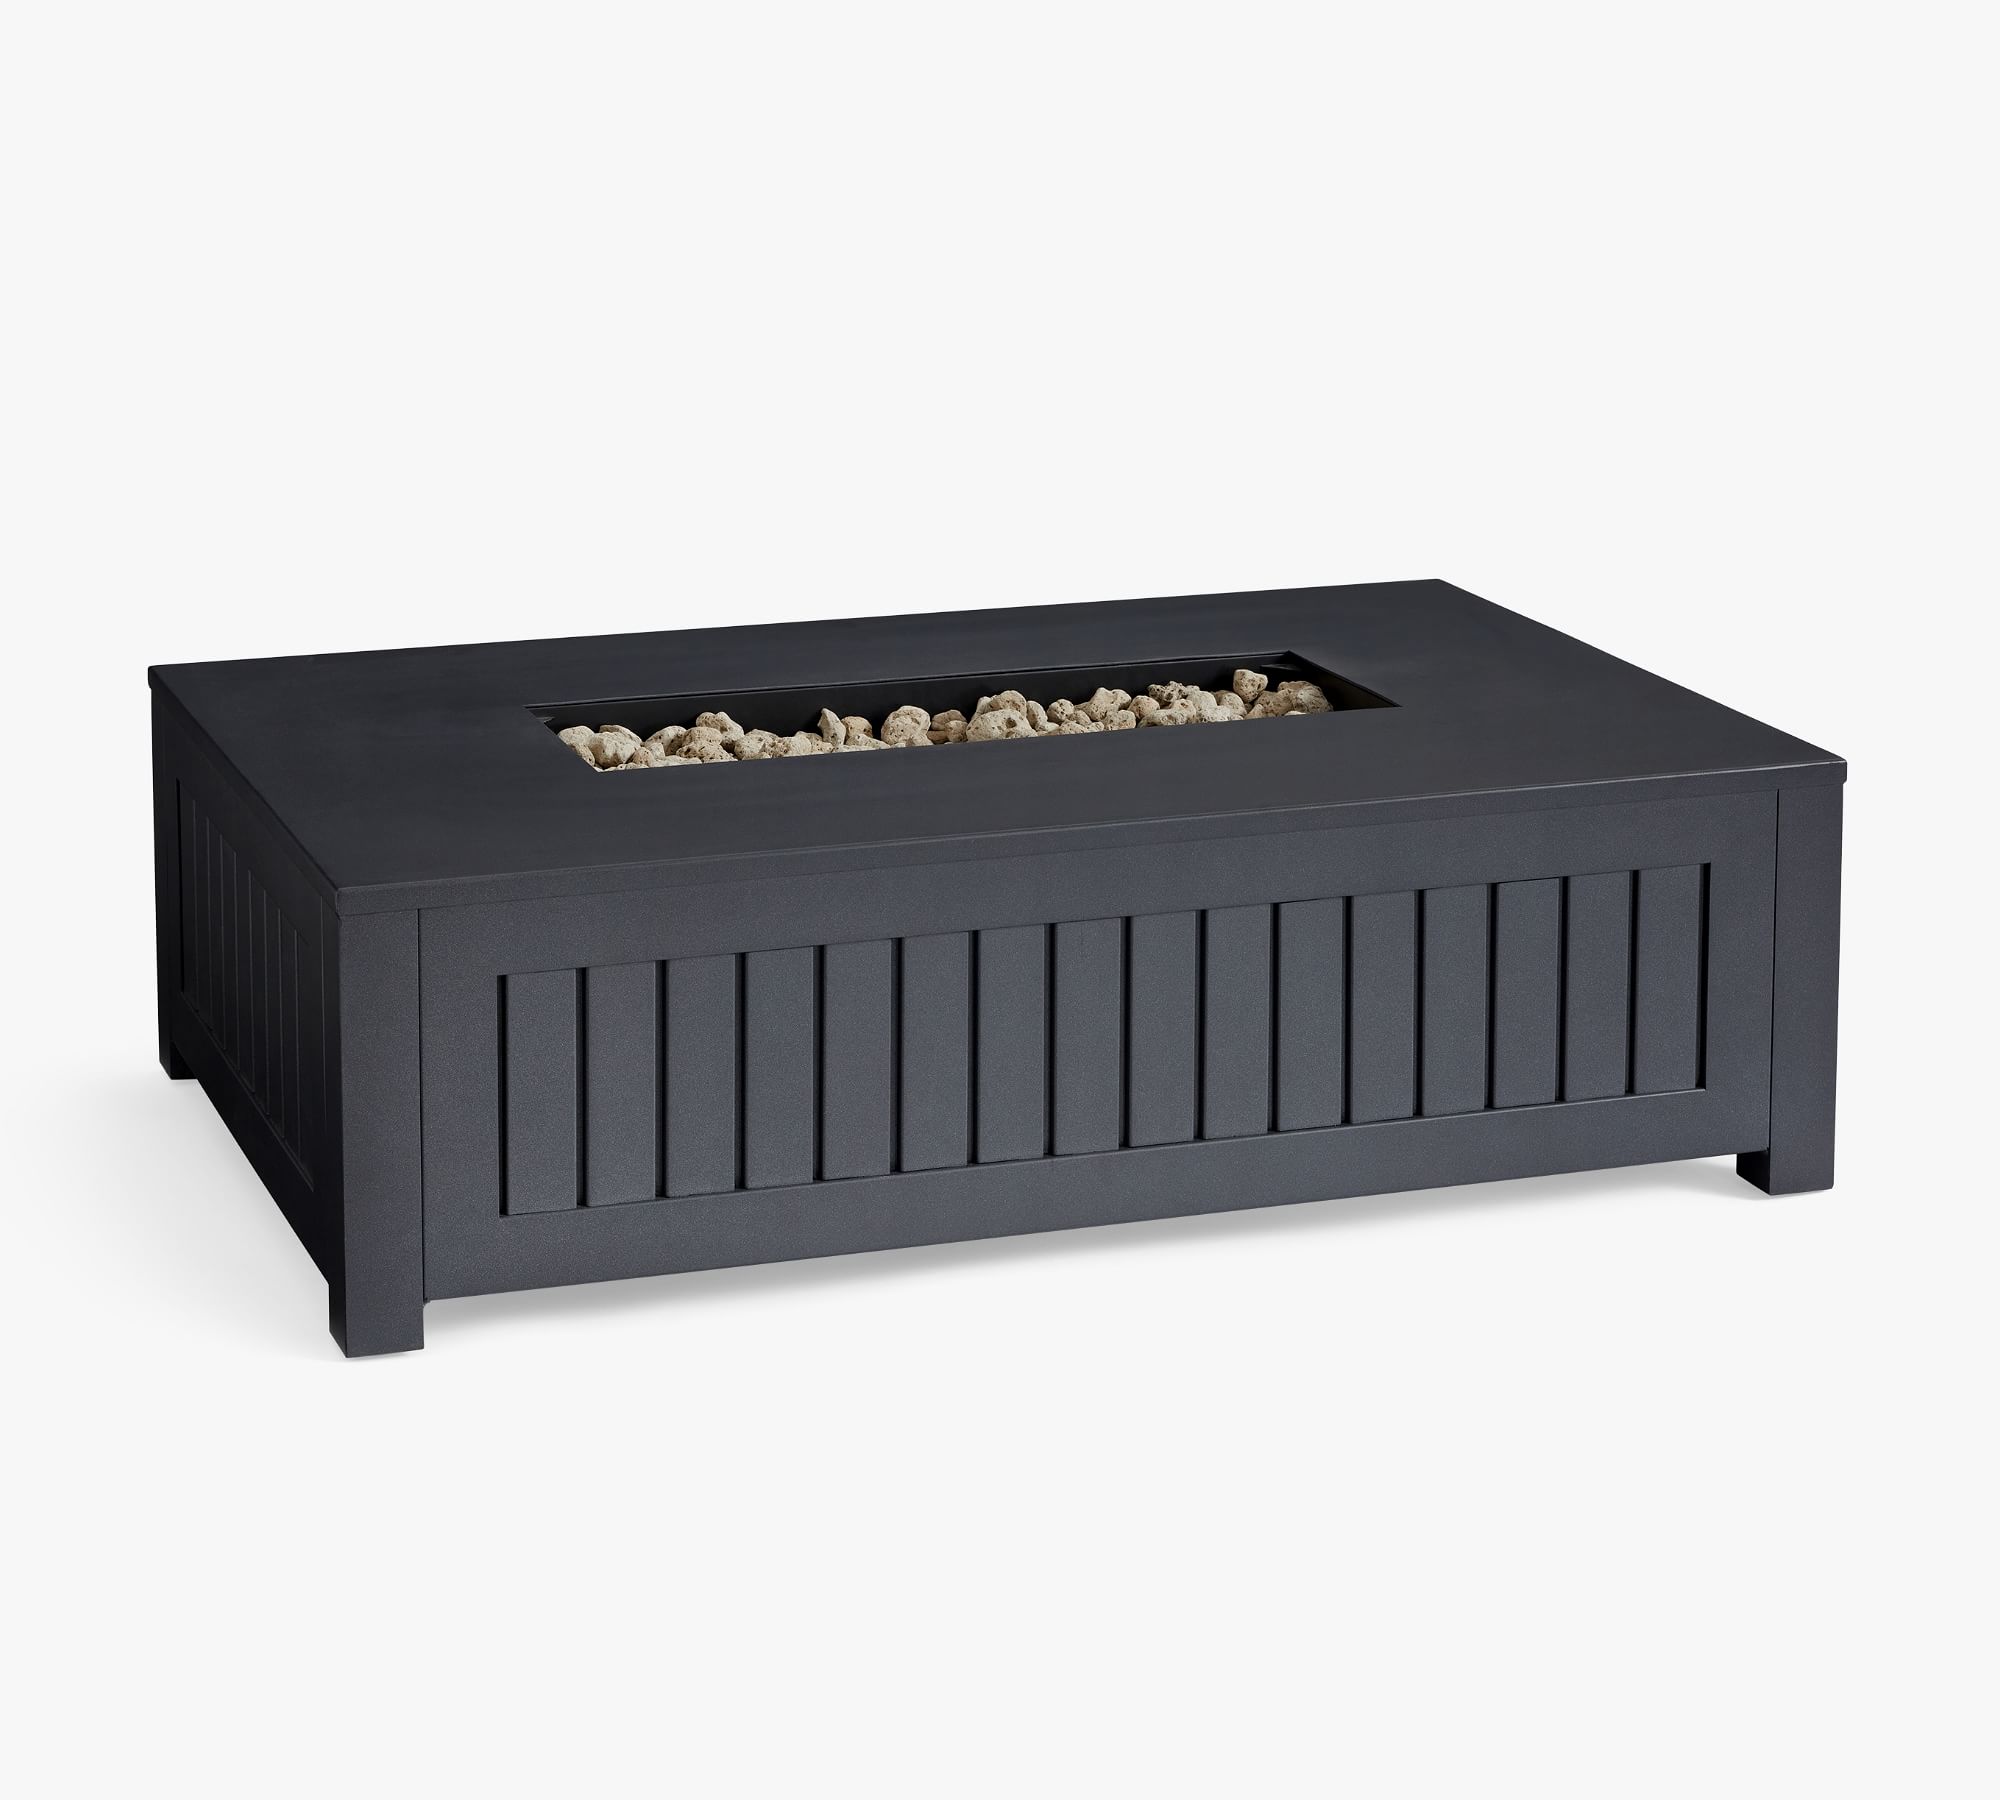 Indio Metal Rectangular Fire Pit Table (50")